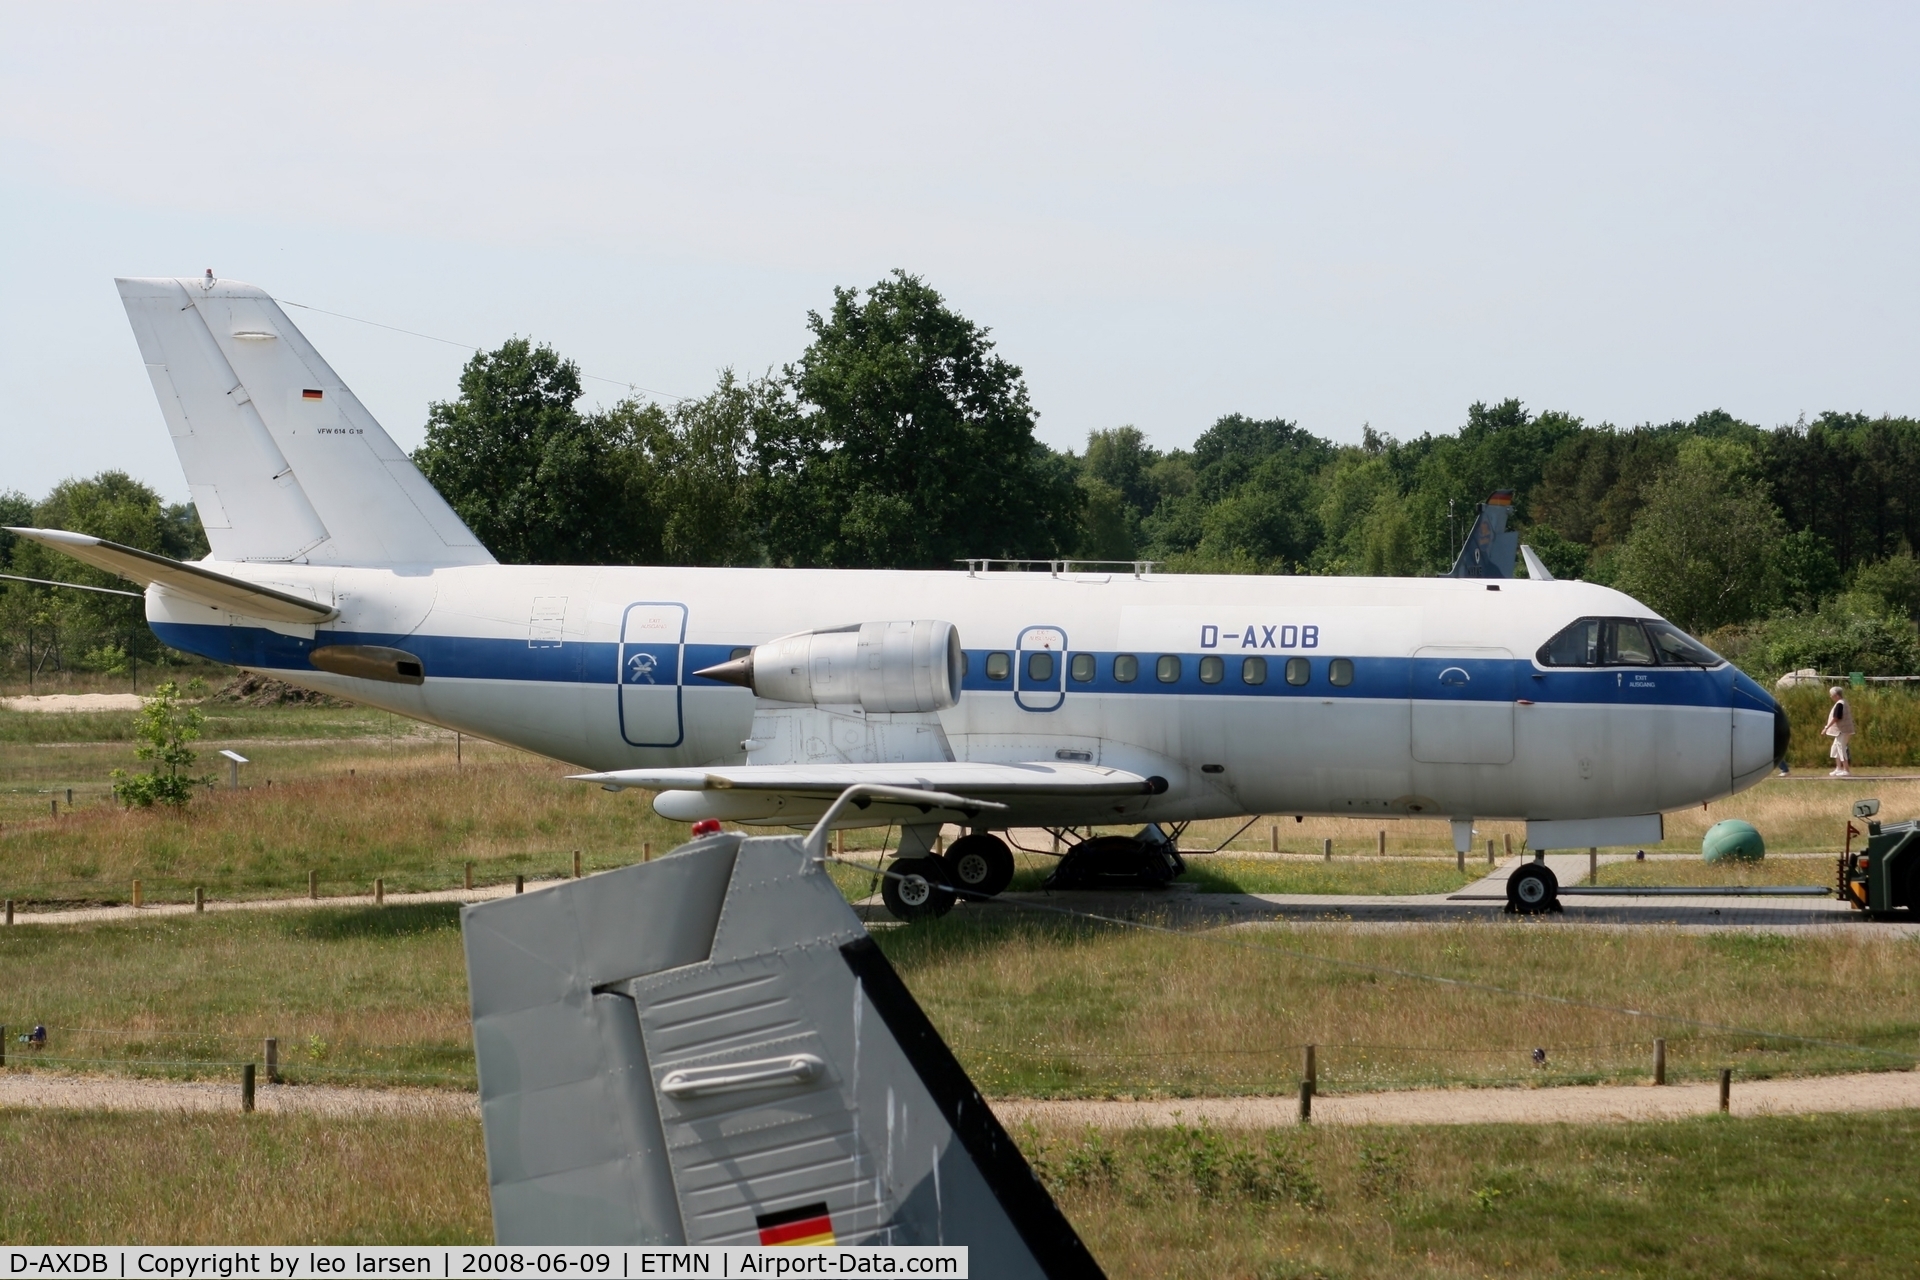 D-AXDB, 1977 VFW-Fokker VFW-614 C/N G18, Nordholz Museum ETMN 9.6.08